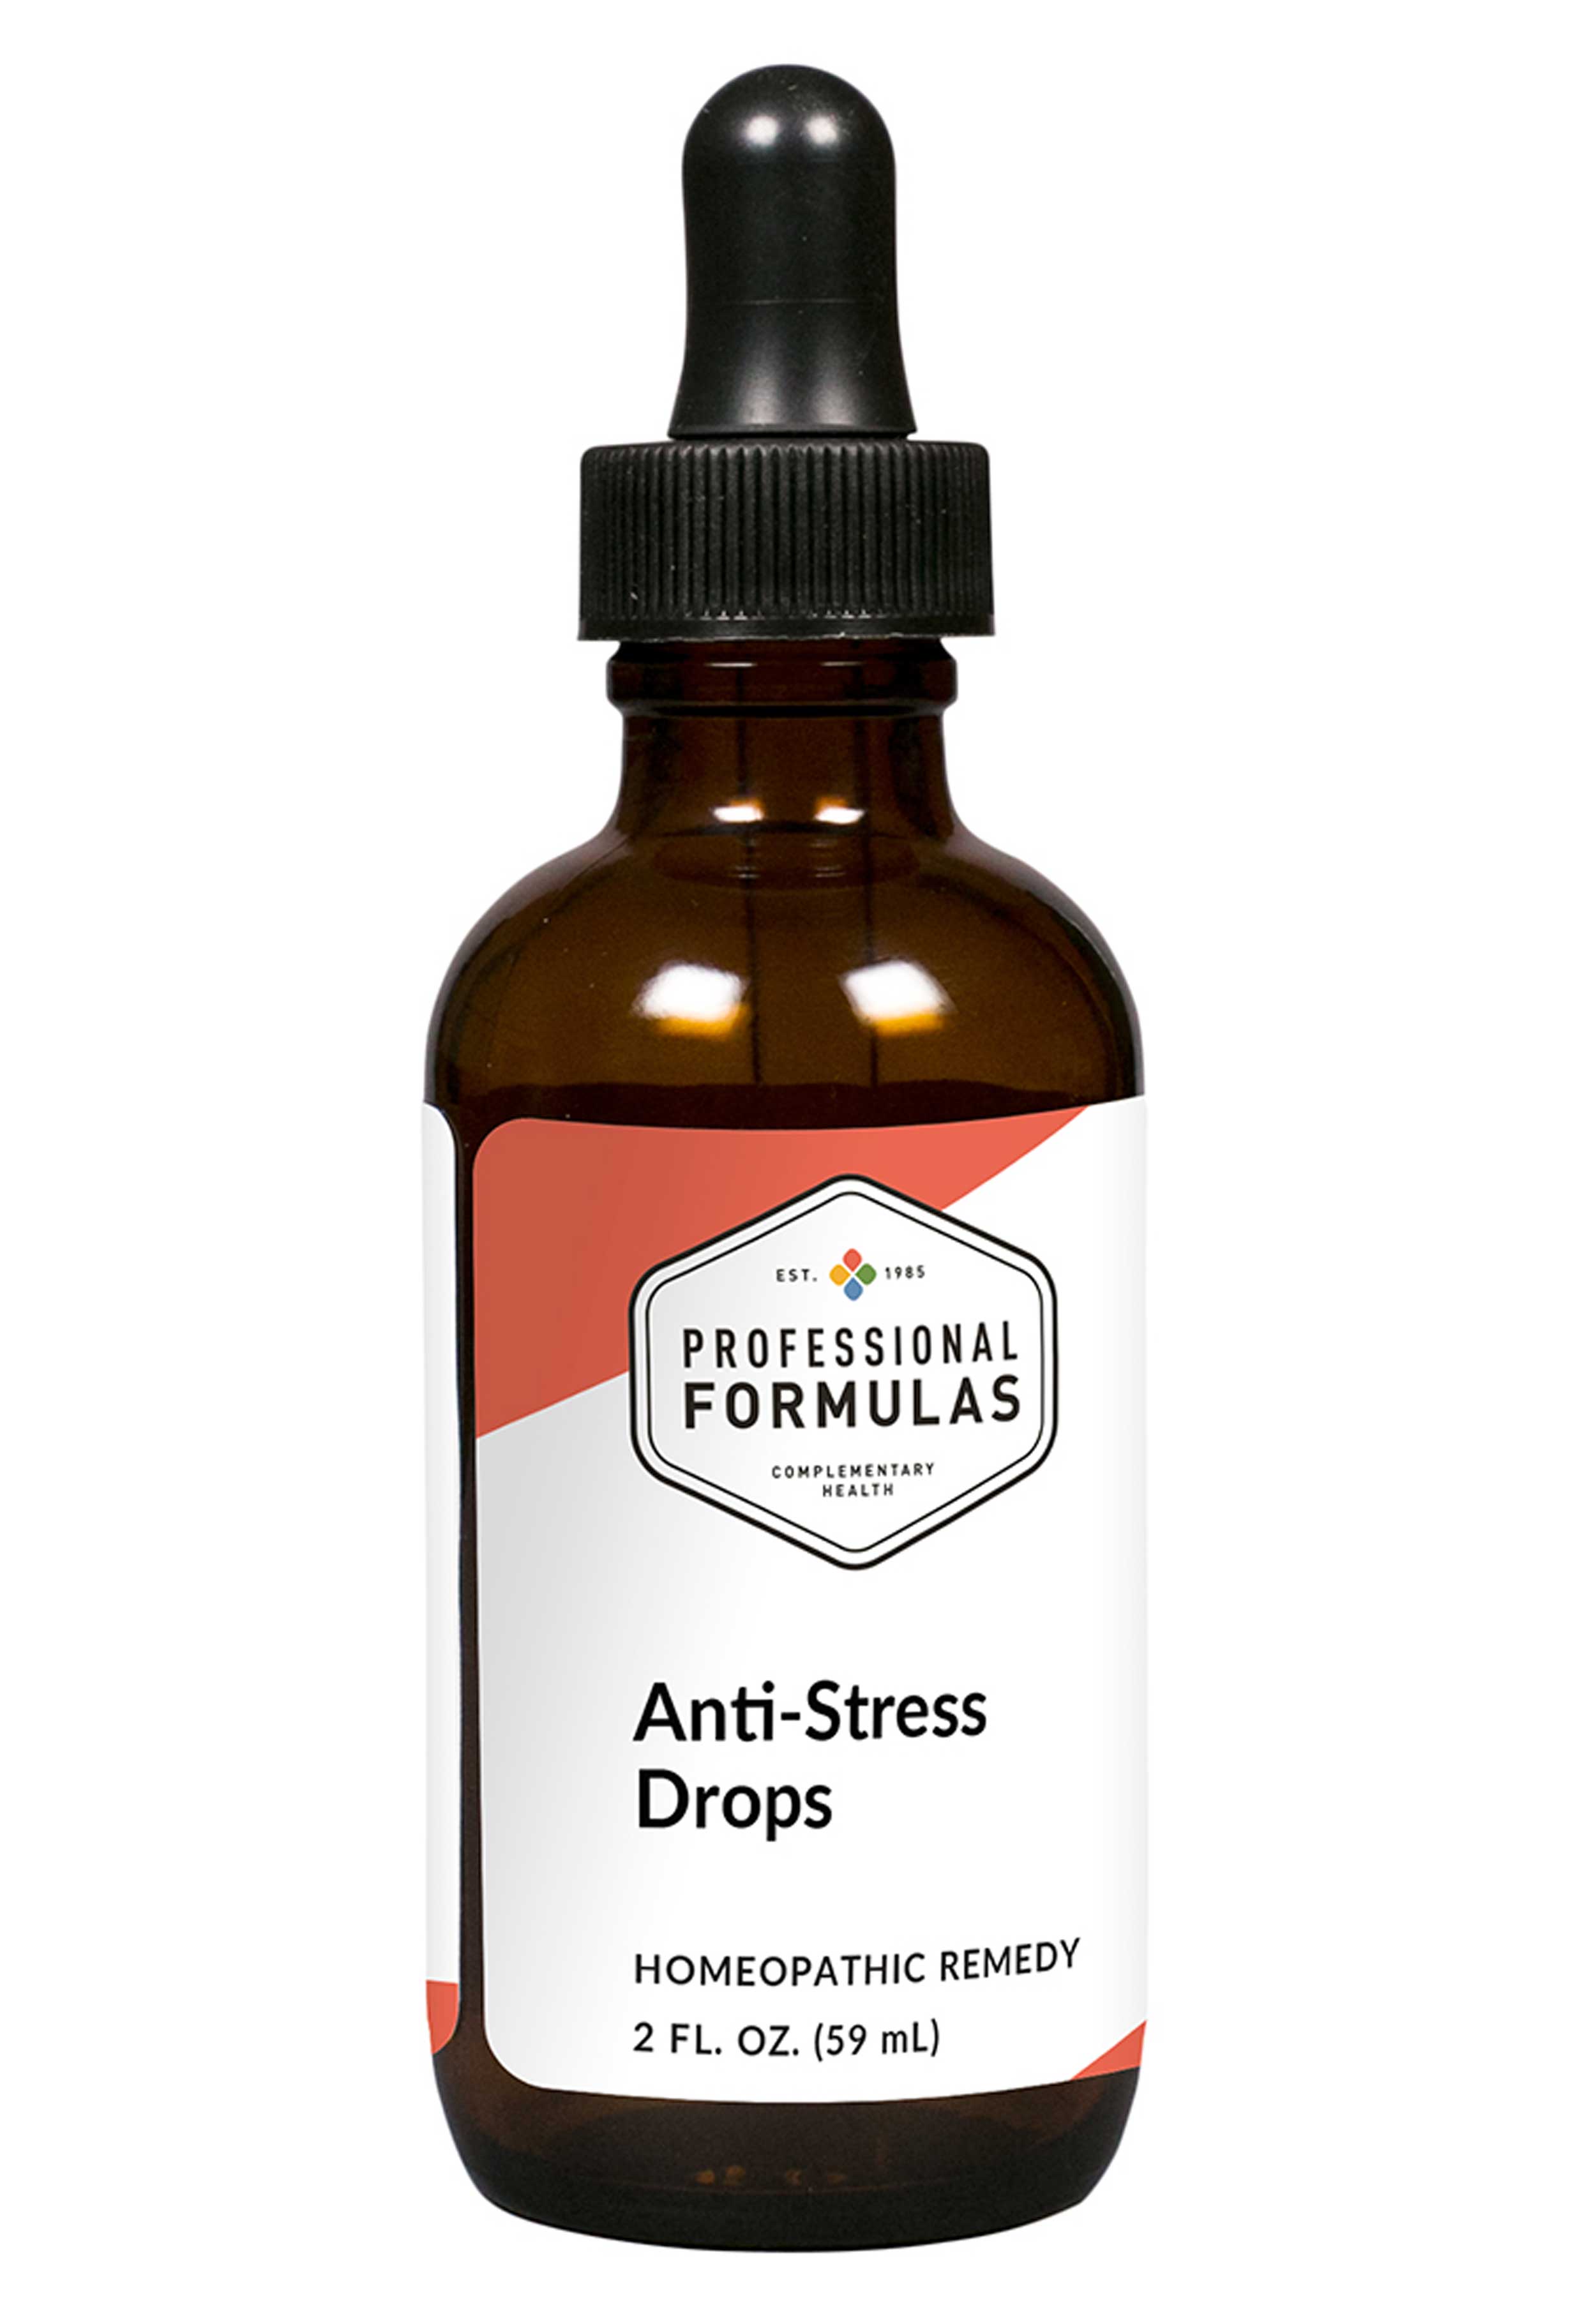 Professional Formulas Anti-Stress Drops